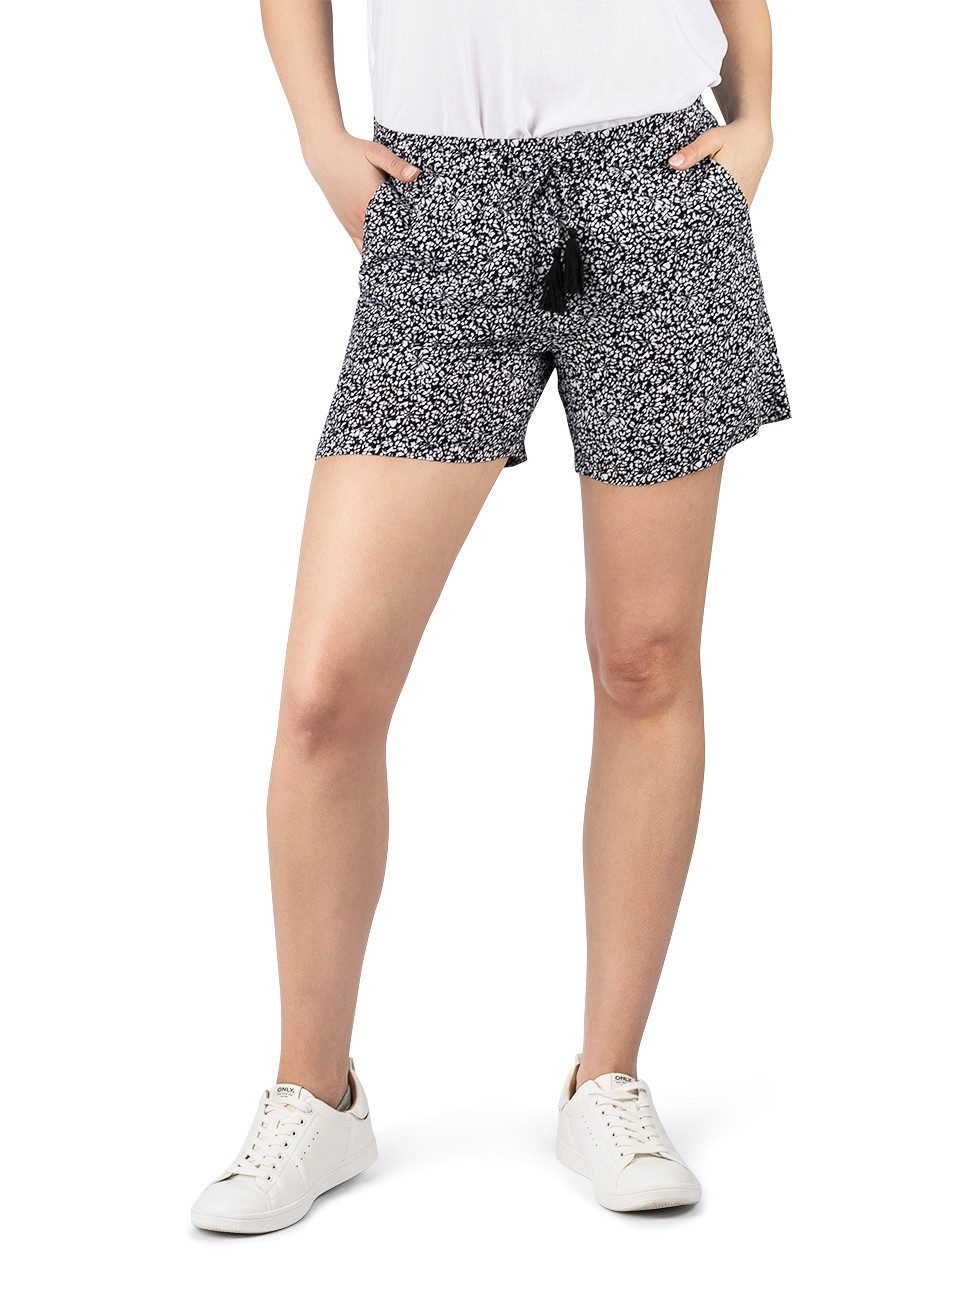 DENIMFY Chinoshorts Damen Shorts DFLia Regular Fit kurze Stoffhose mit Kordelzug aus 100% Viskose